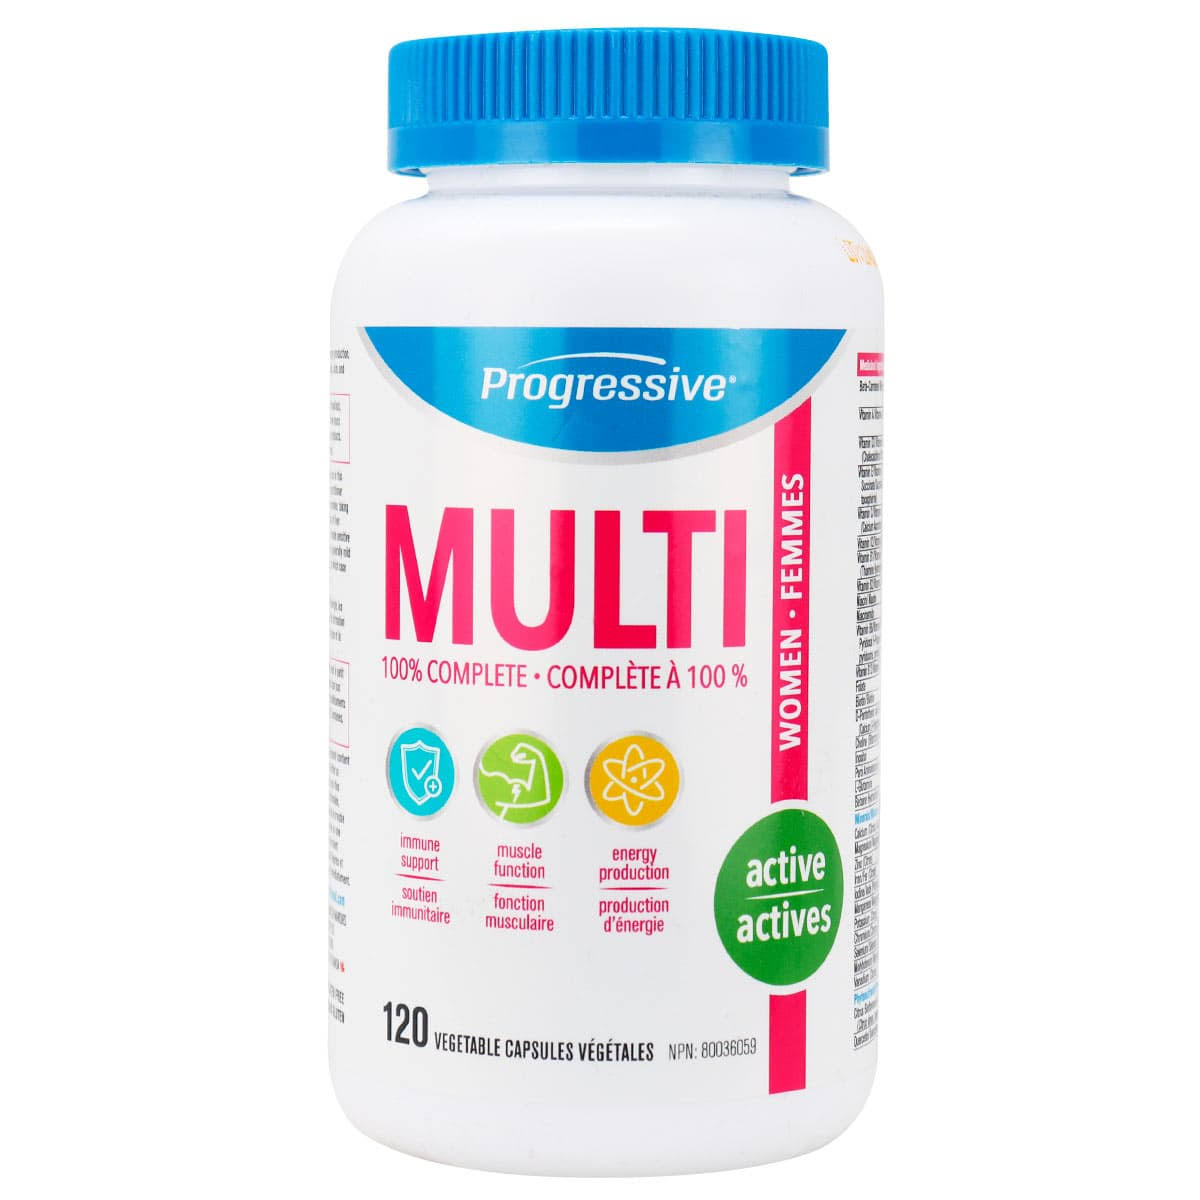 Progressive Women Multivitamins Supplement - 120ct